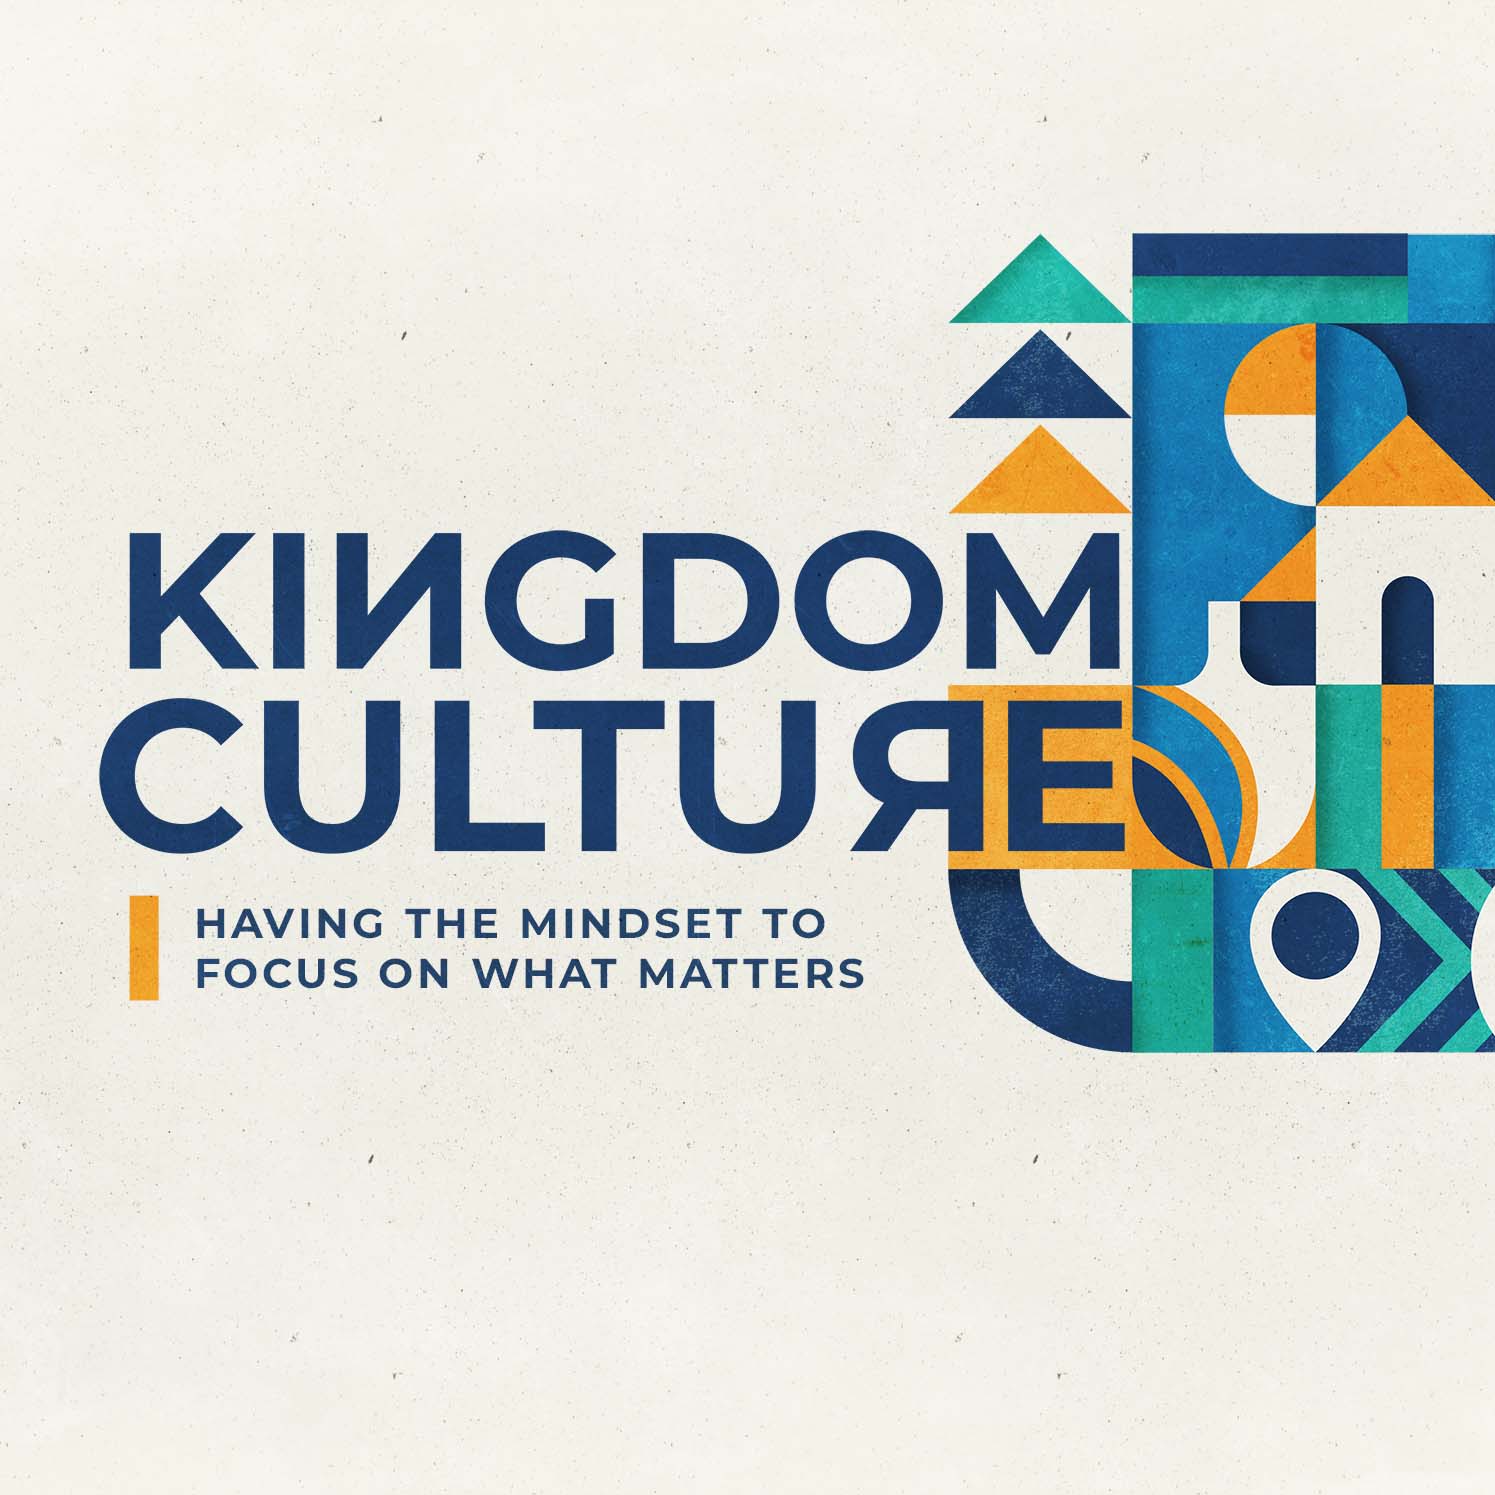 Kingdom Culture (The King of the Kingdom)